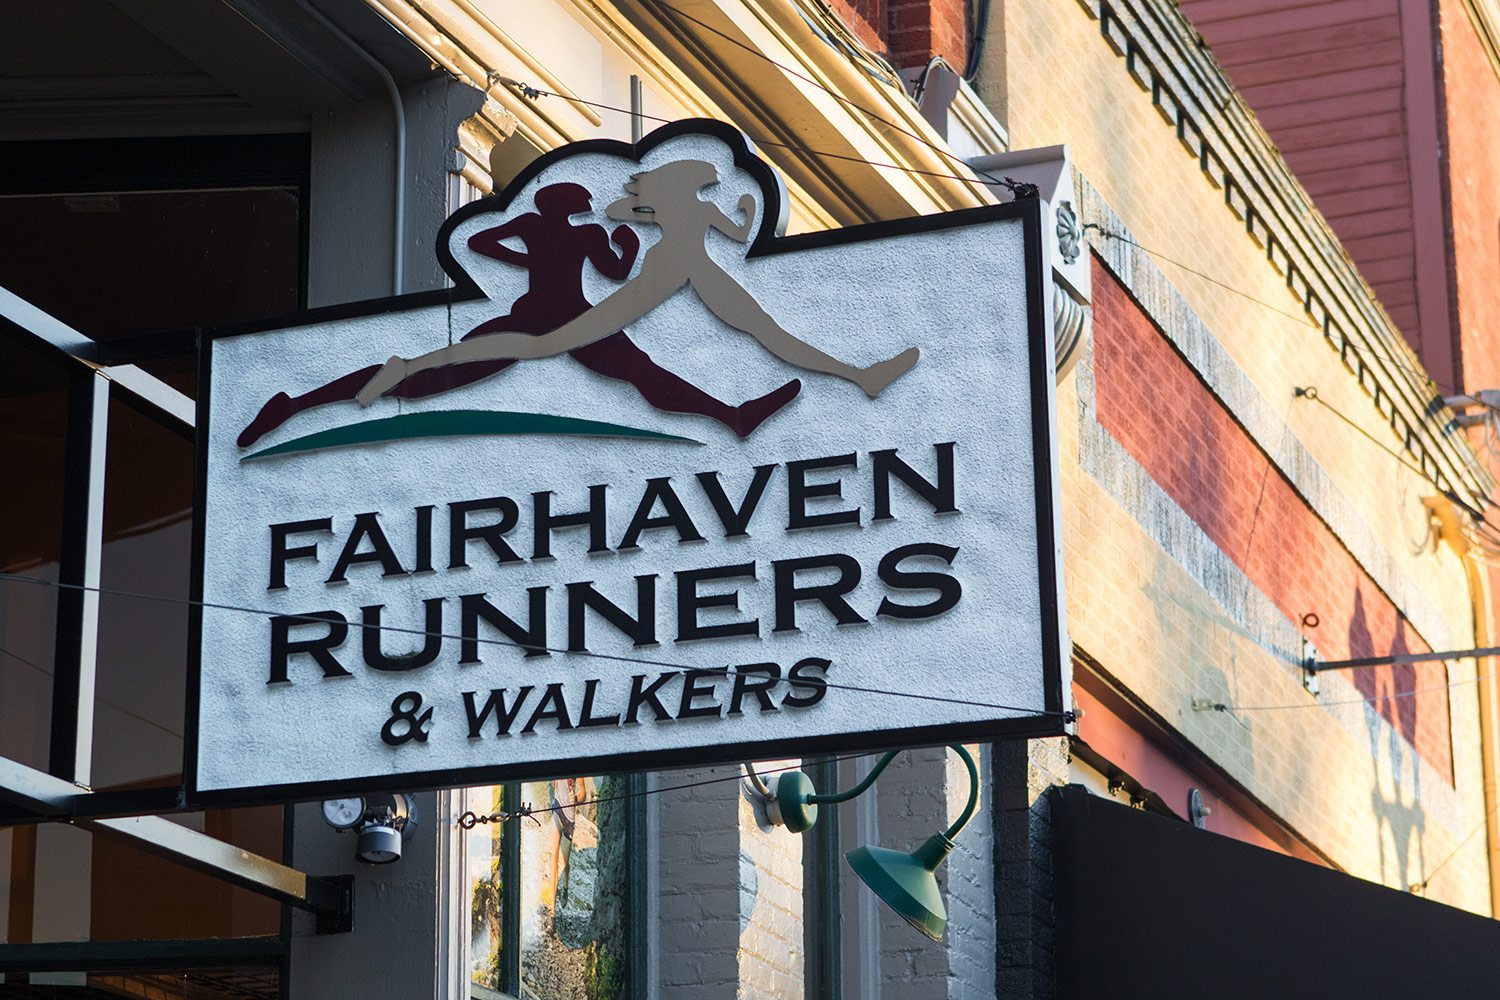 Fairhaven Runners